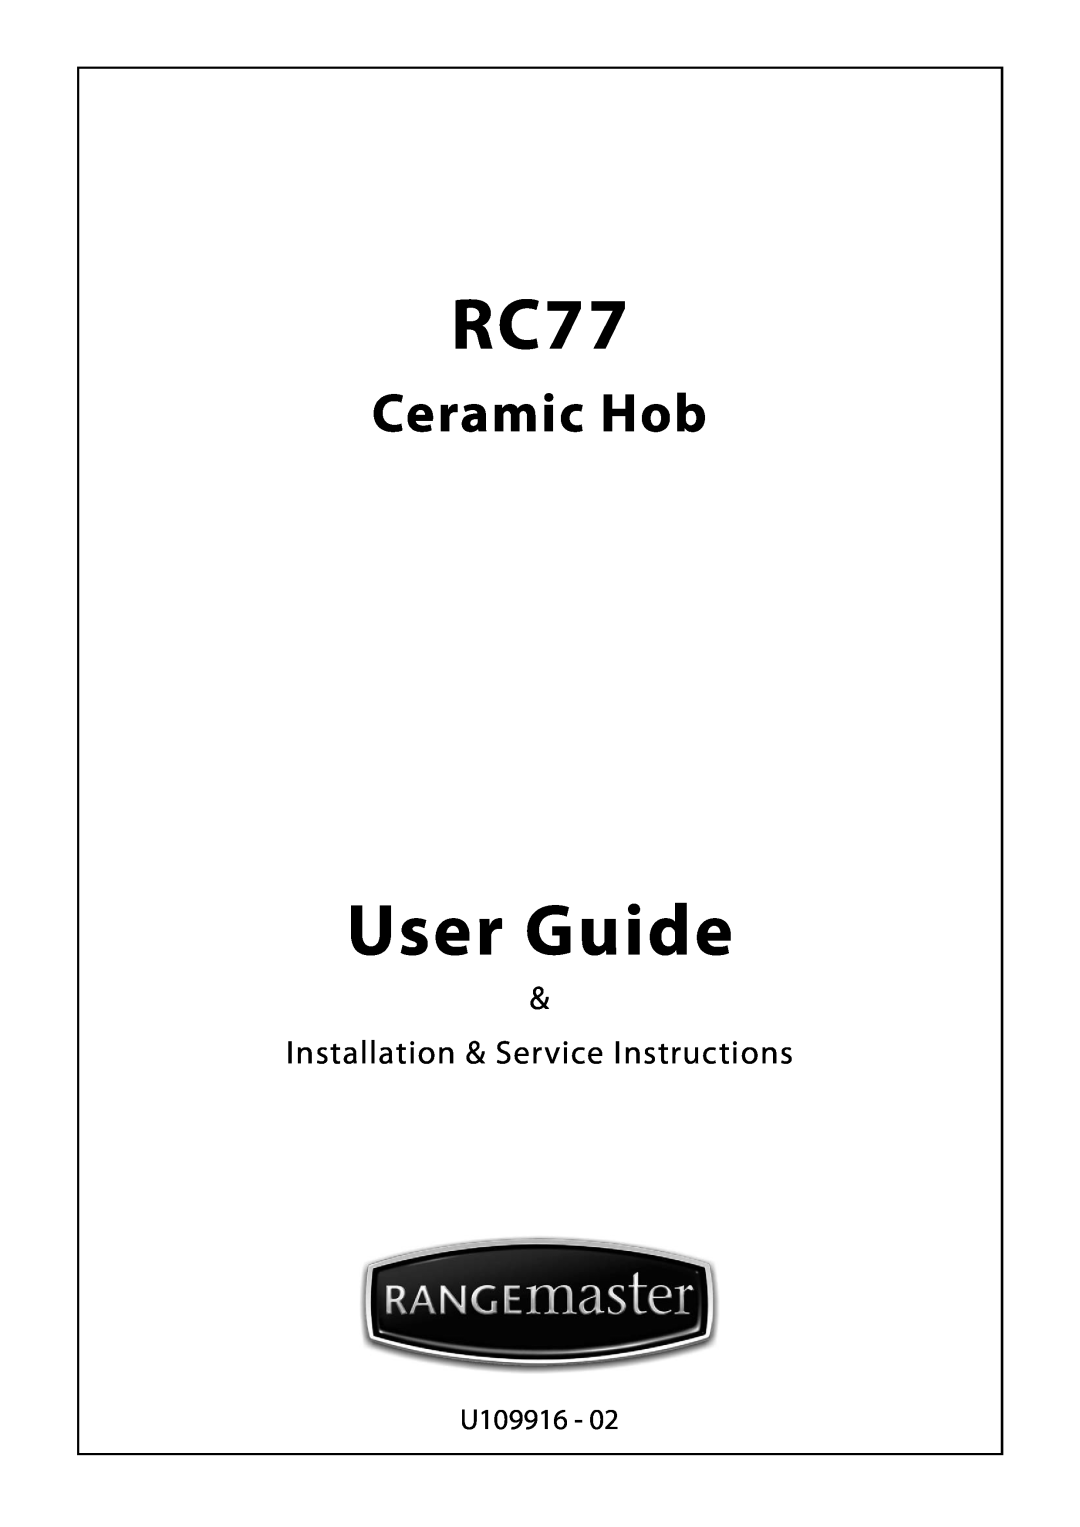 Rangemaster RC77 manual User Guide, Ceramic Hob, Installation & Service Instructions, U109916 